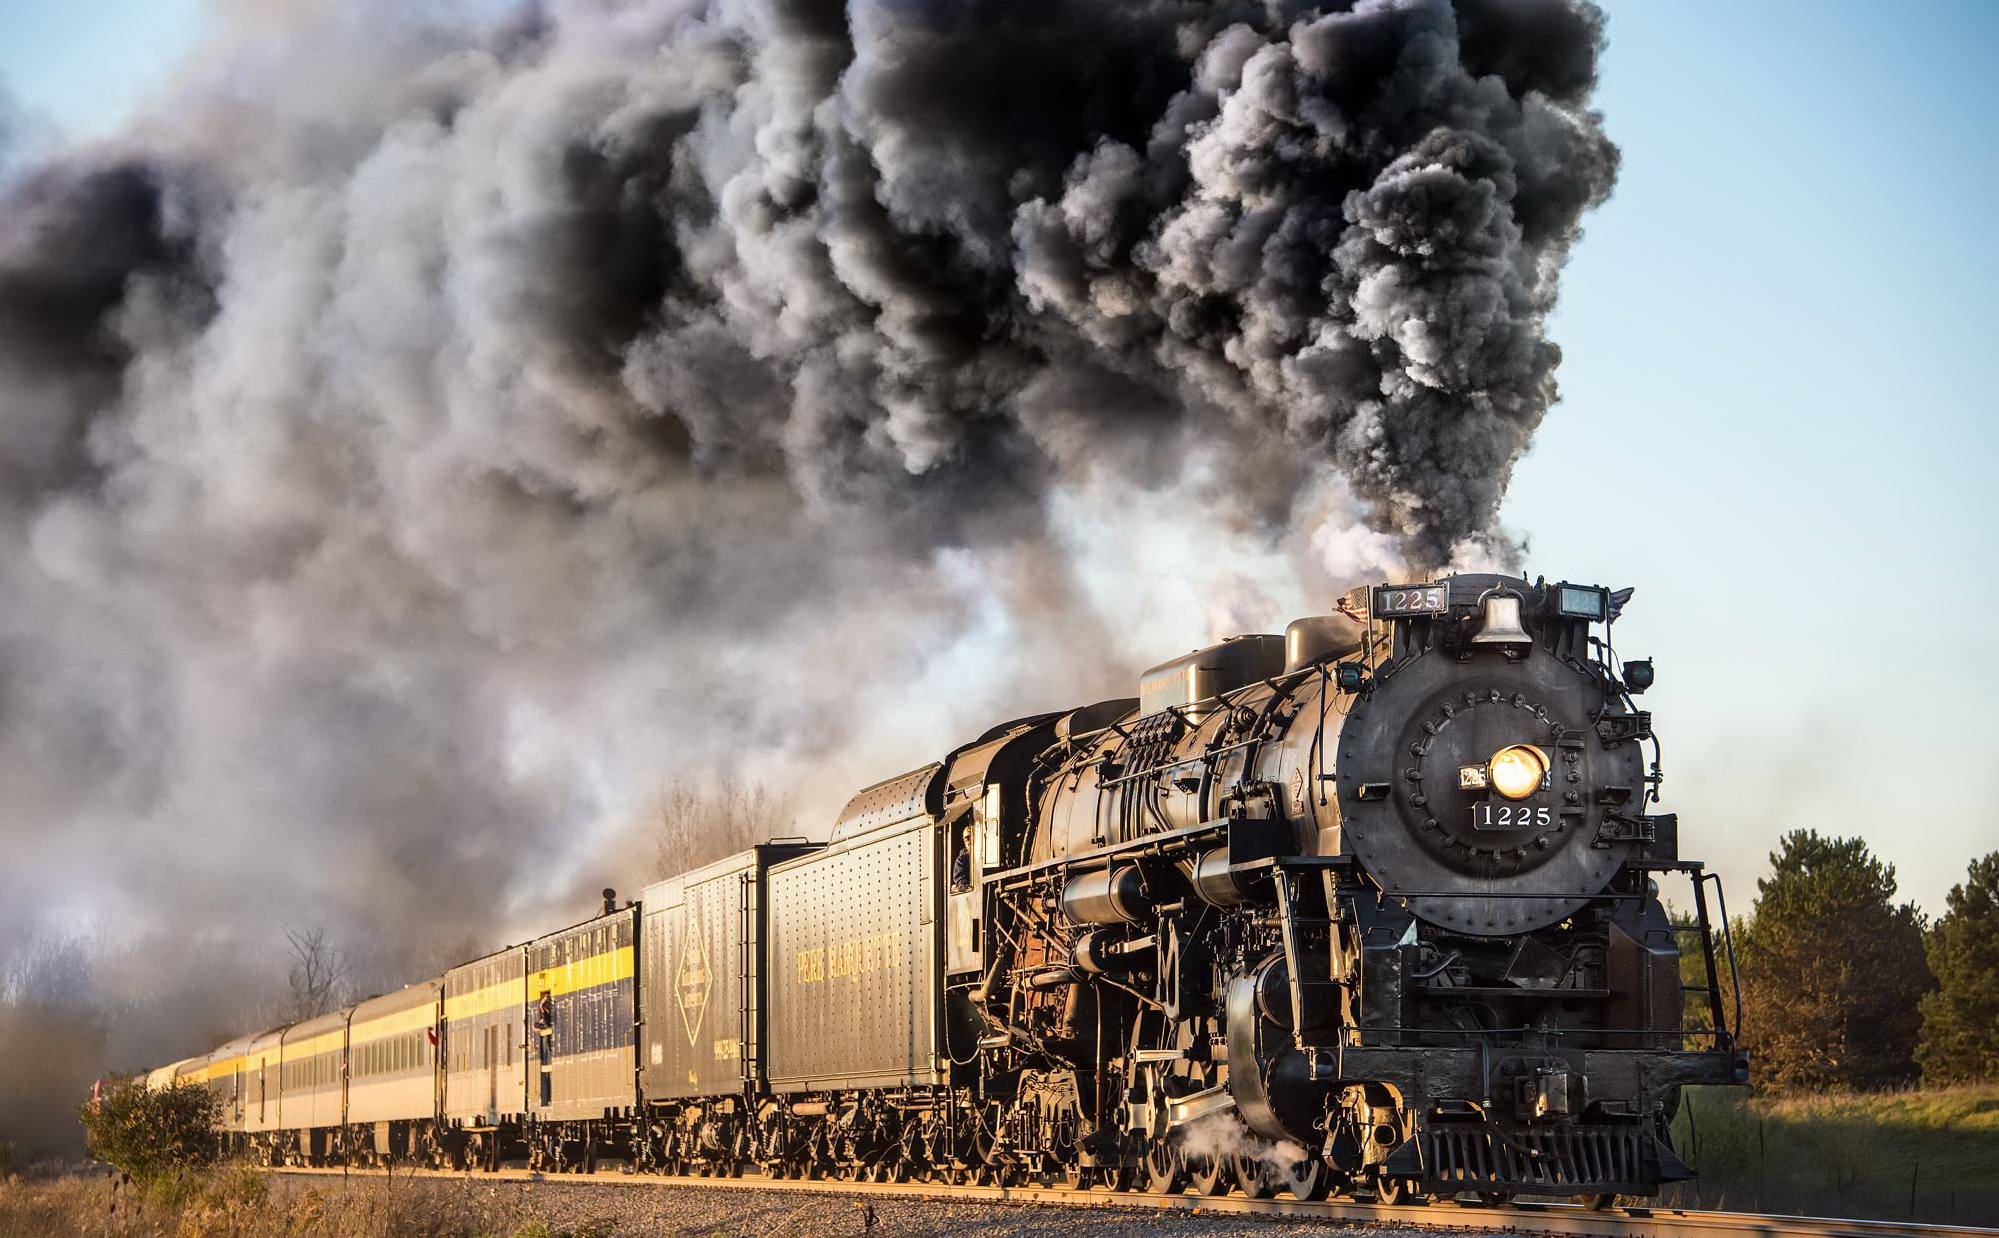 locomotive, smoke, vehicles, train, steam train